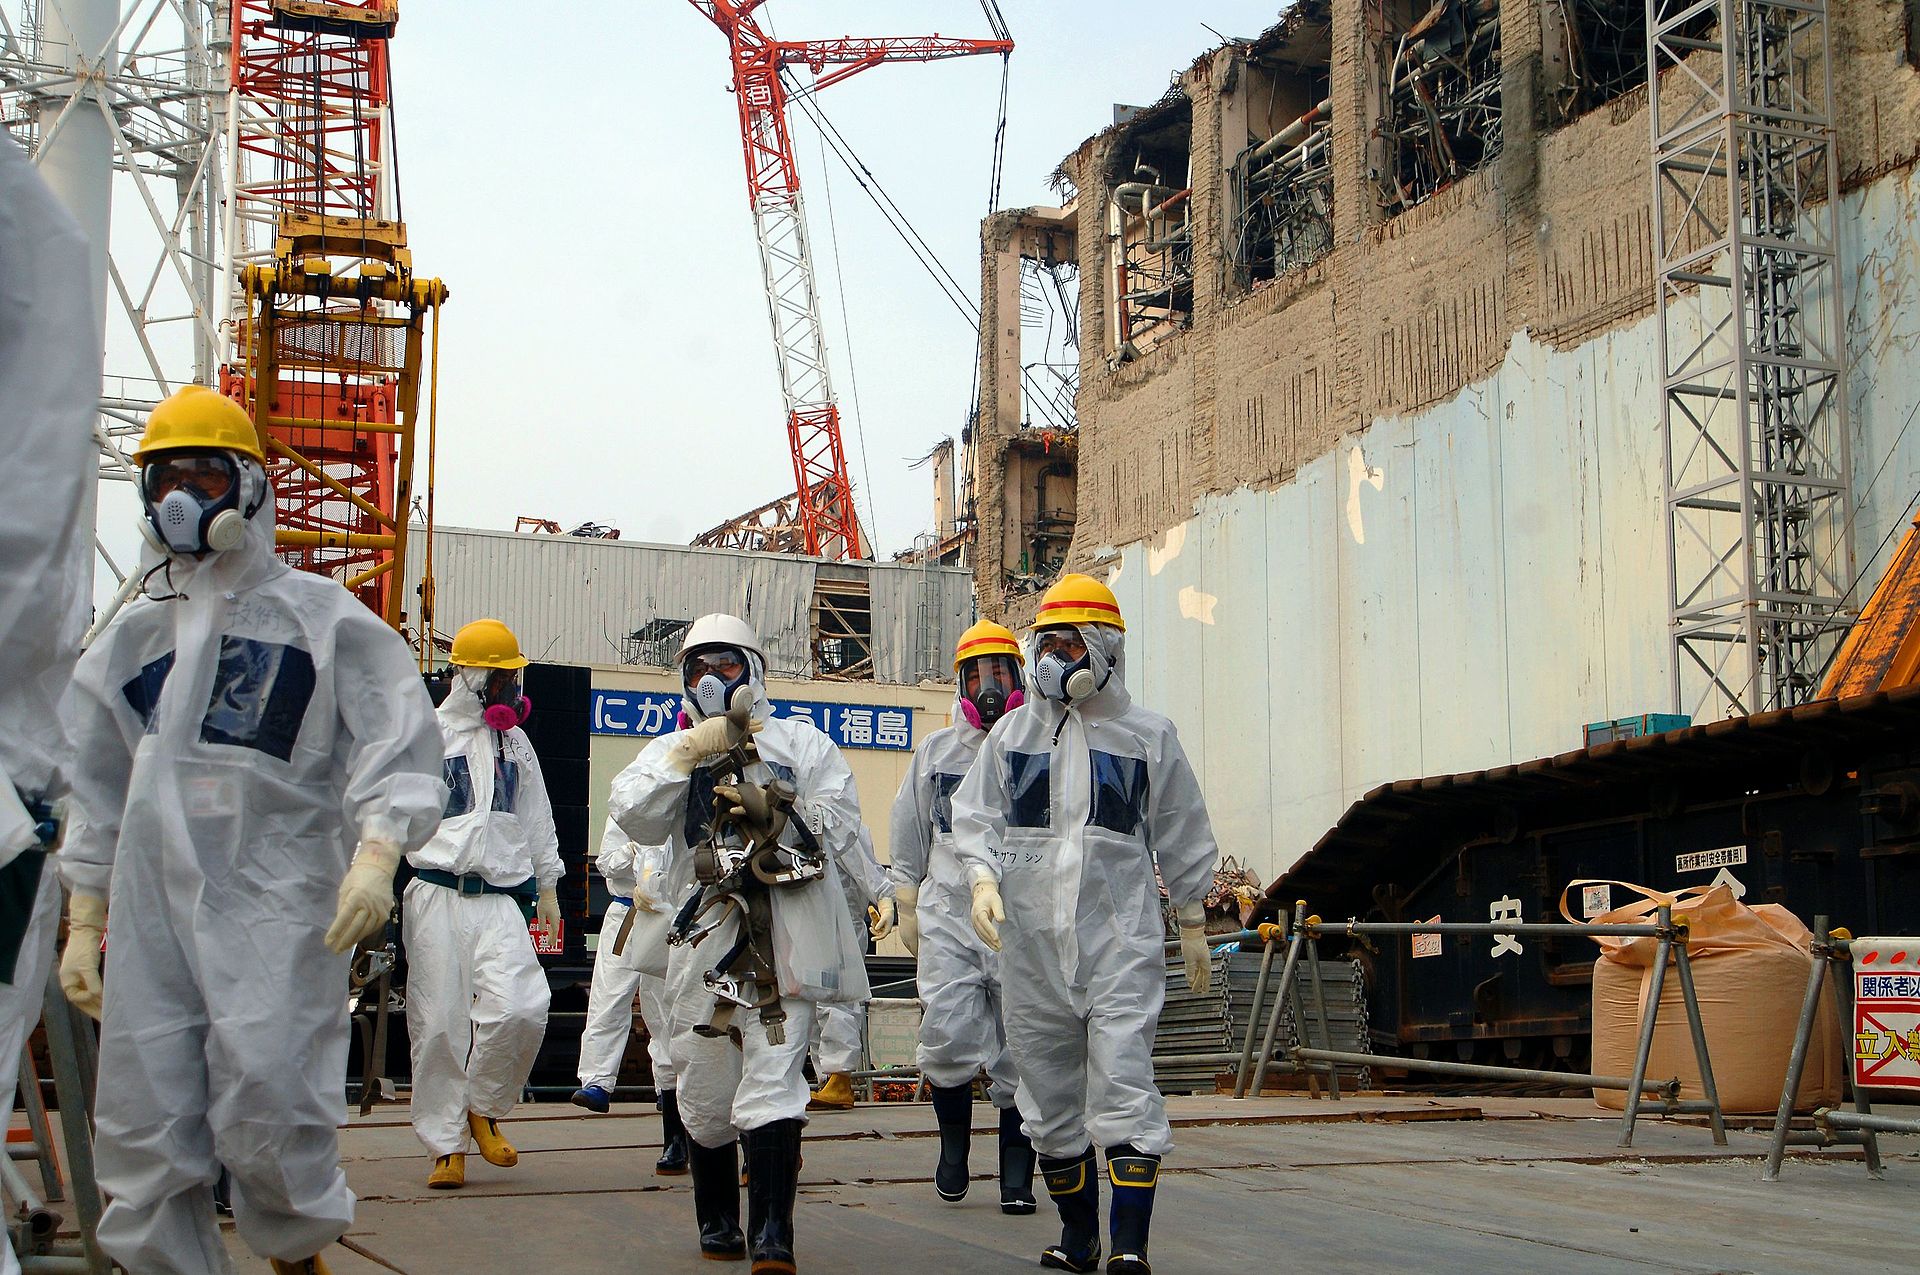 japan nuclear reactor meltdown 2011